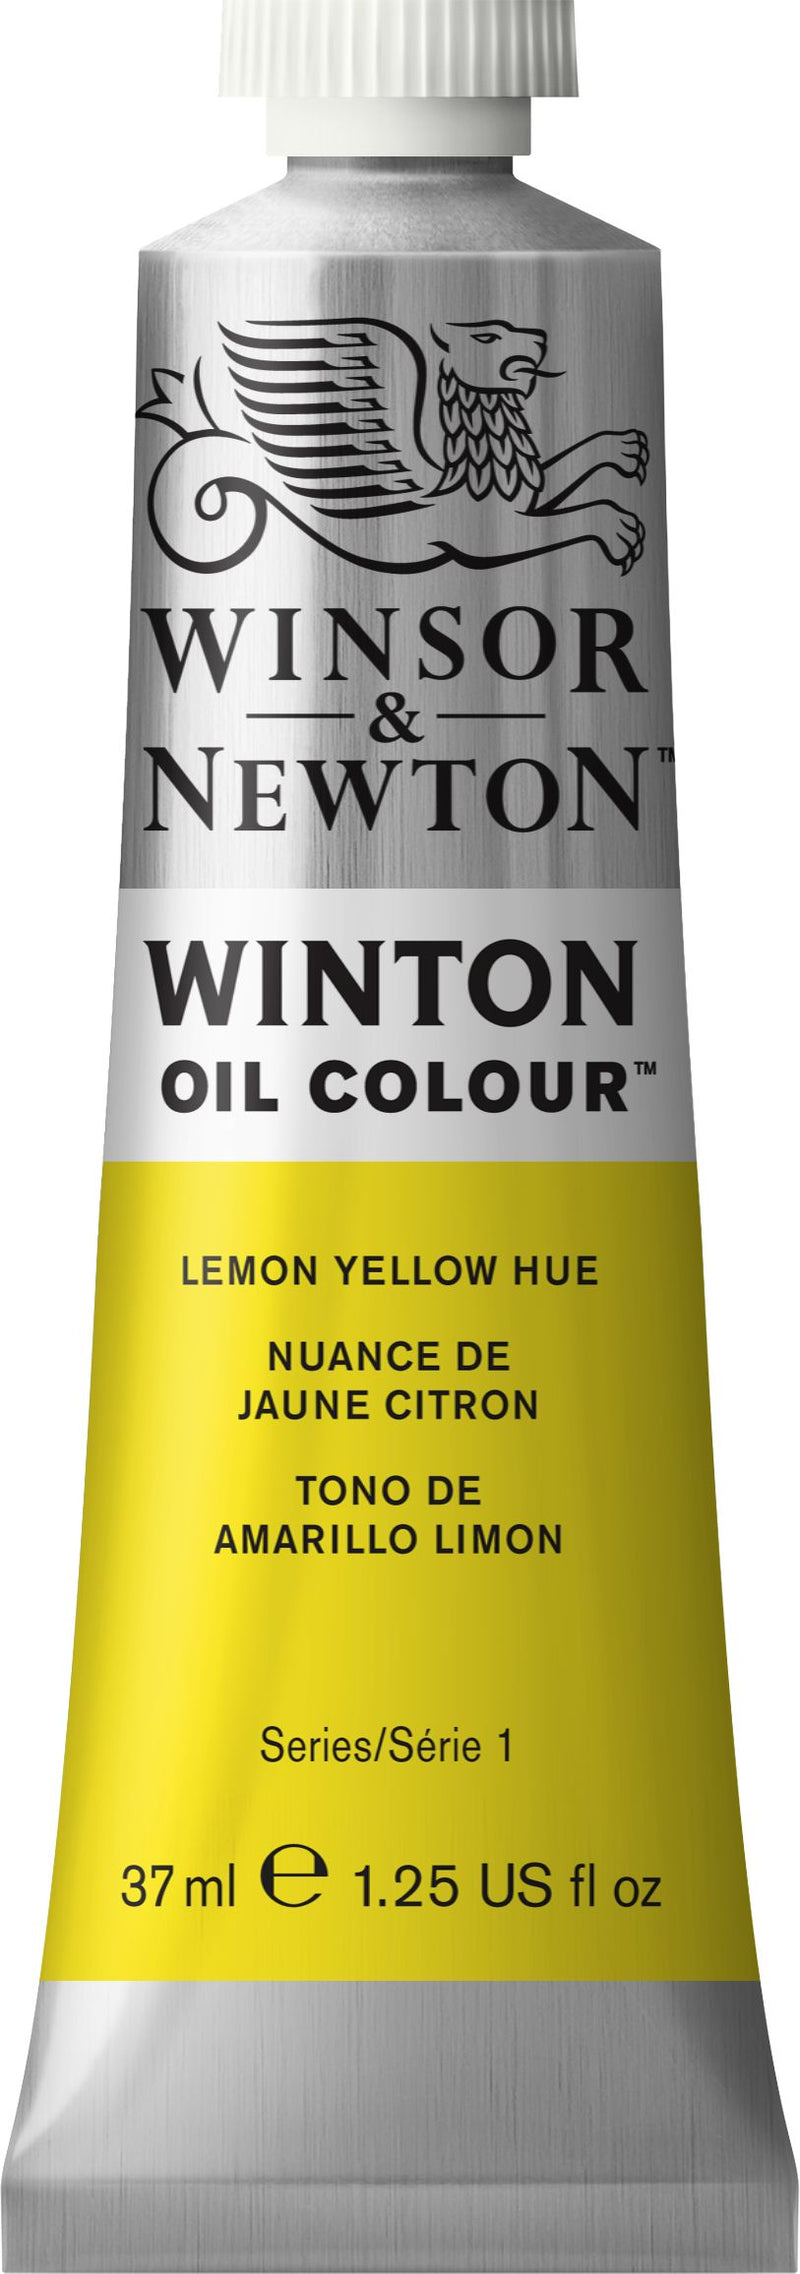 Winton Oil Colour Lemon Yellow Hue - 37ml tube